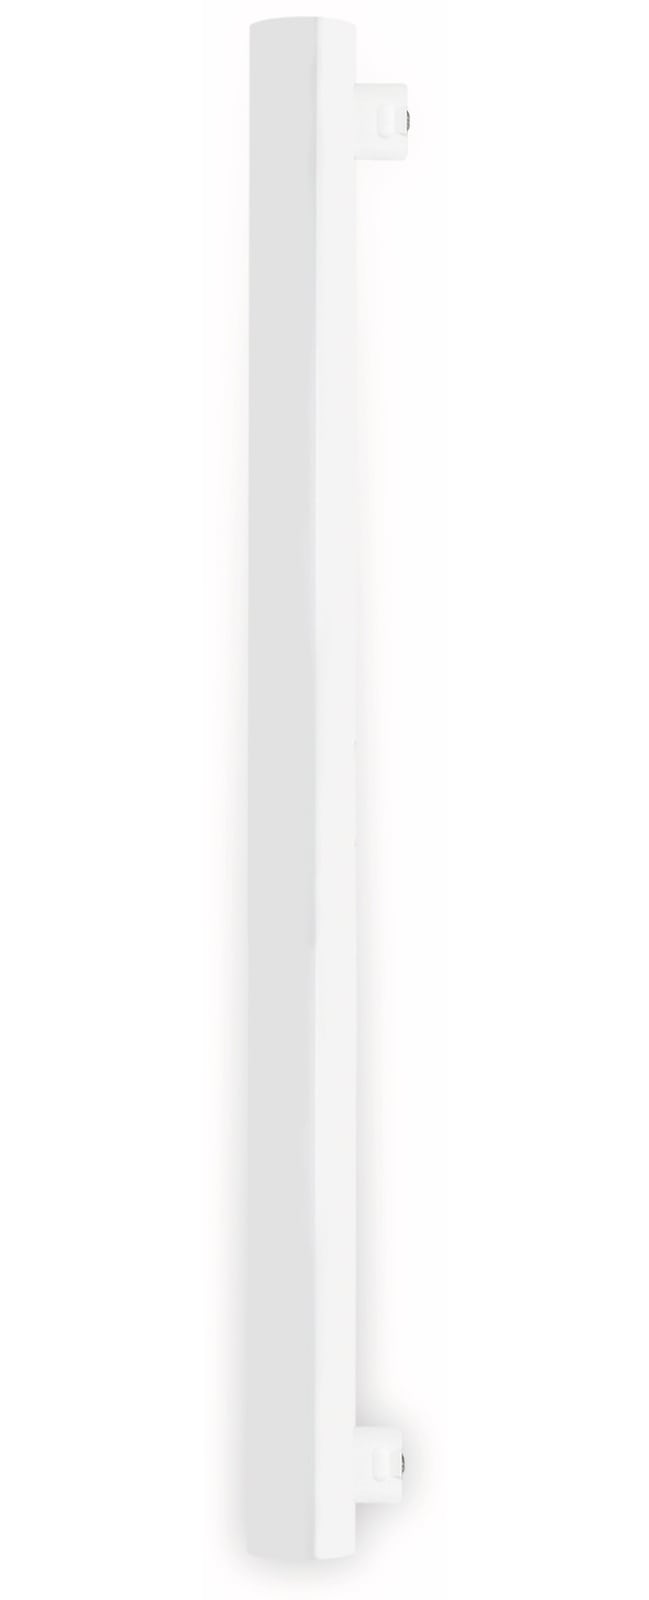 BLULAXA LED-Linienlampe 47521, EEK: G, 30 cm, 5 W, 400 lm, S14S von Blulaxa